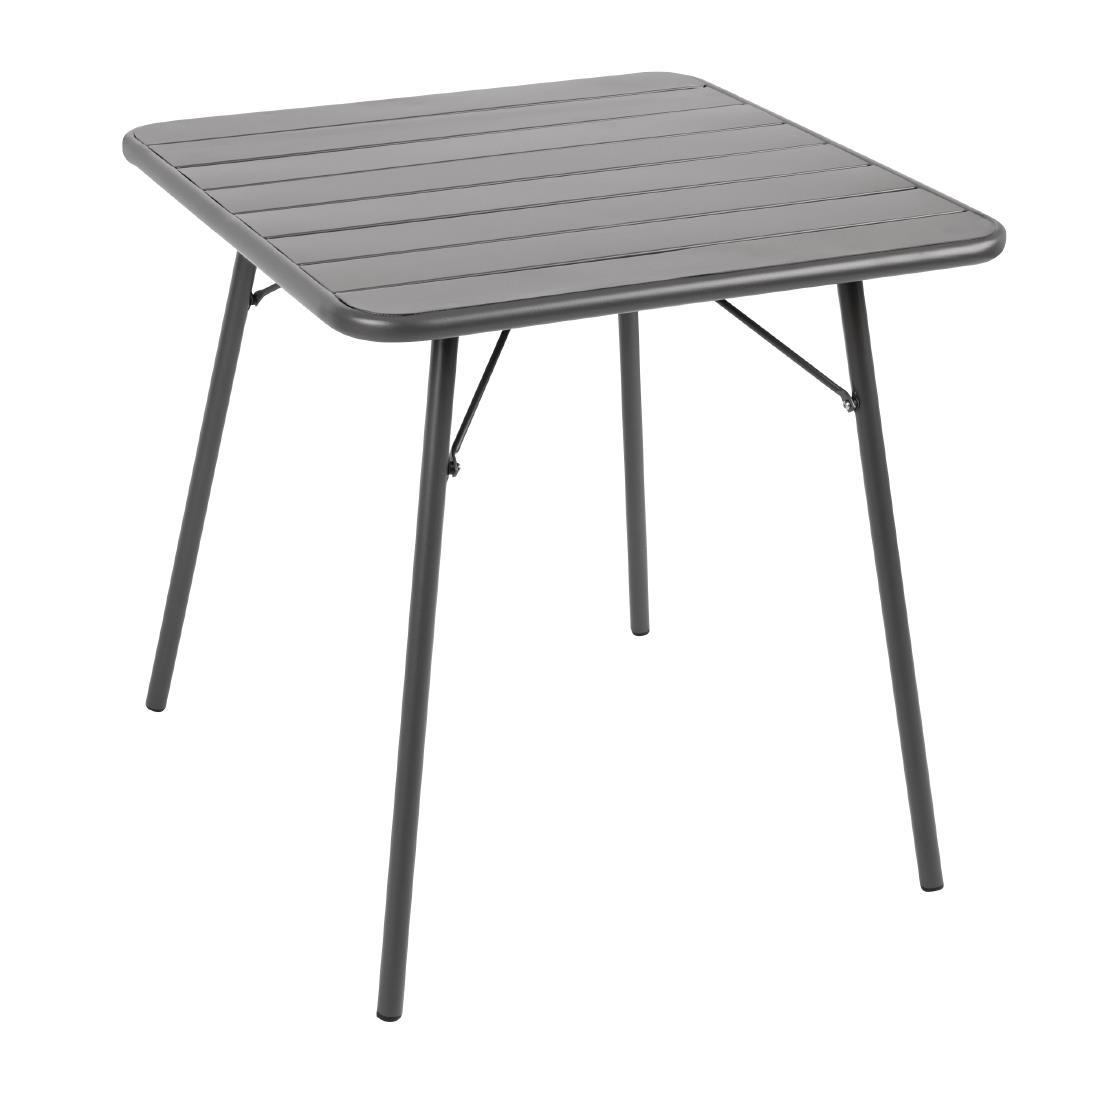 Bolero Square Slatted Steel Table Grey 700mm - CS730  - 1